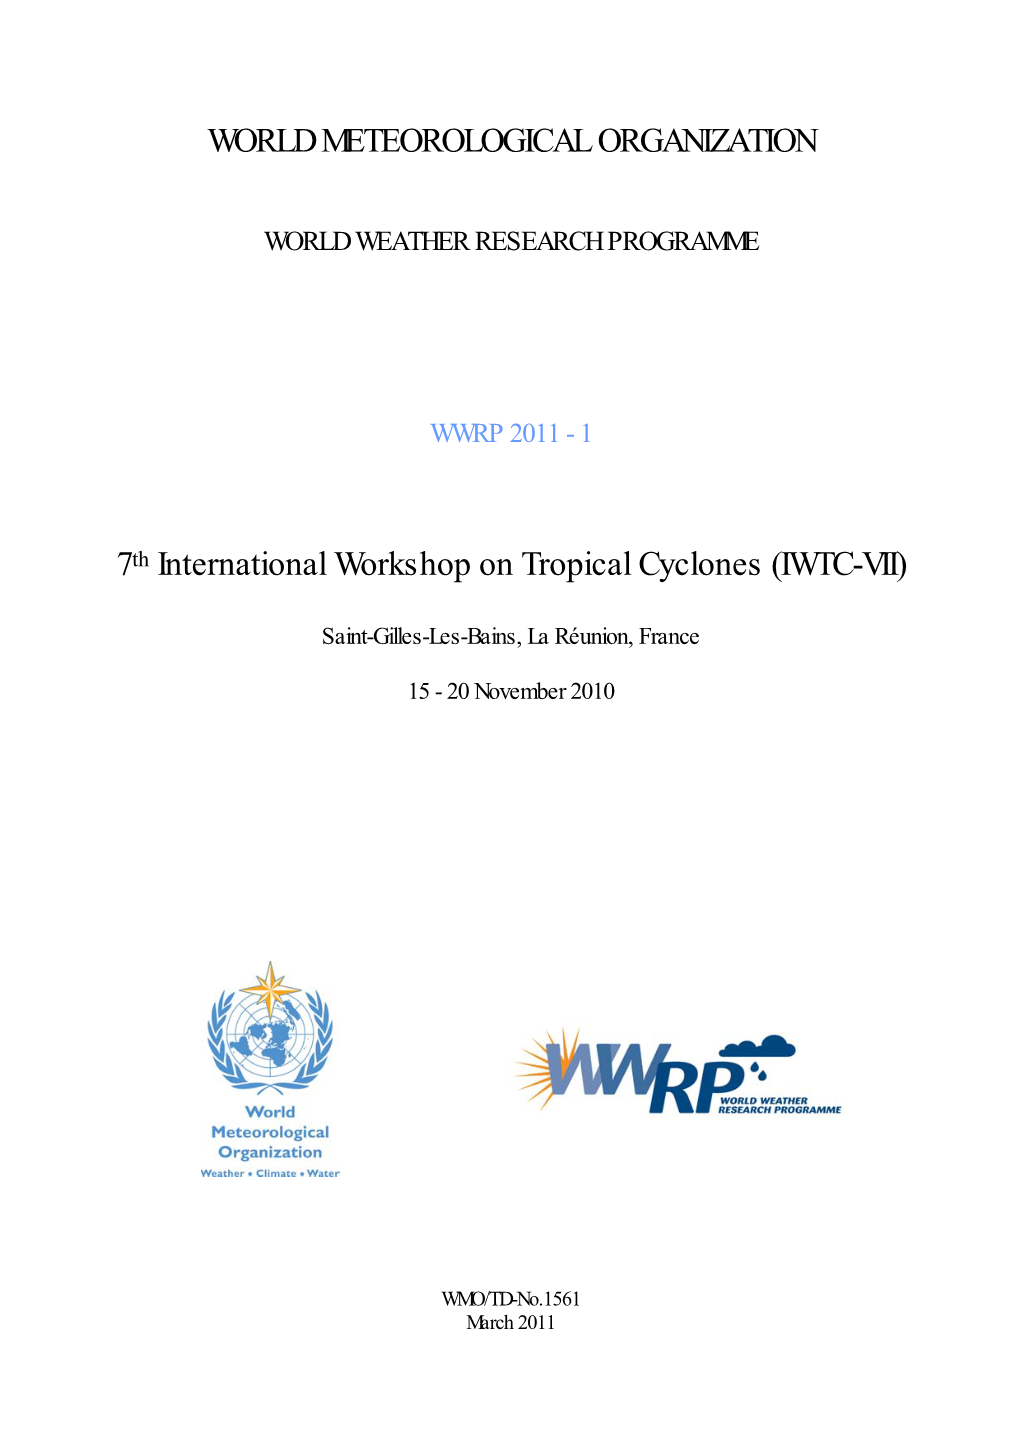 WWRP, 01. 7Th International Workshop on Tropical Cyclones (IWTC-VII)